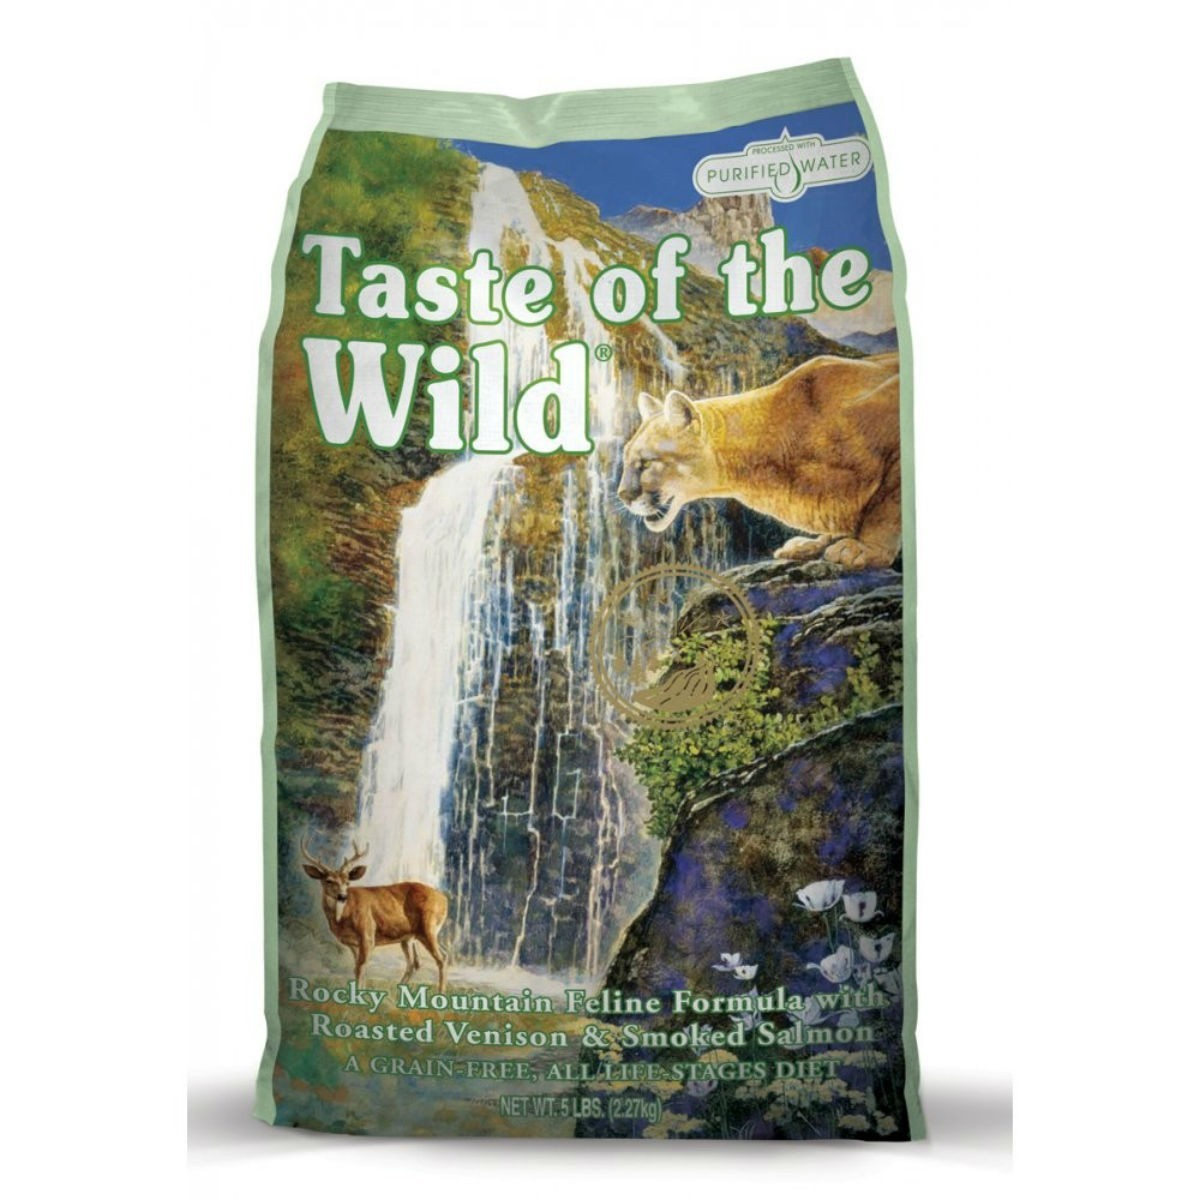 Taste Of The Wild - Rocky Mountain Feline Recipe 6.6Kg – Nai Nướng &amp; Cá Hồi Xông Khói